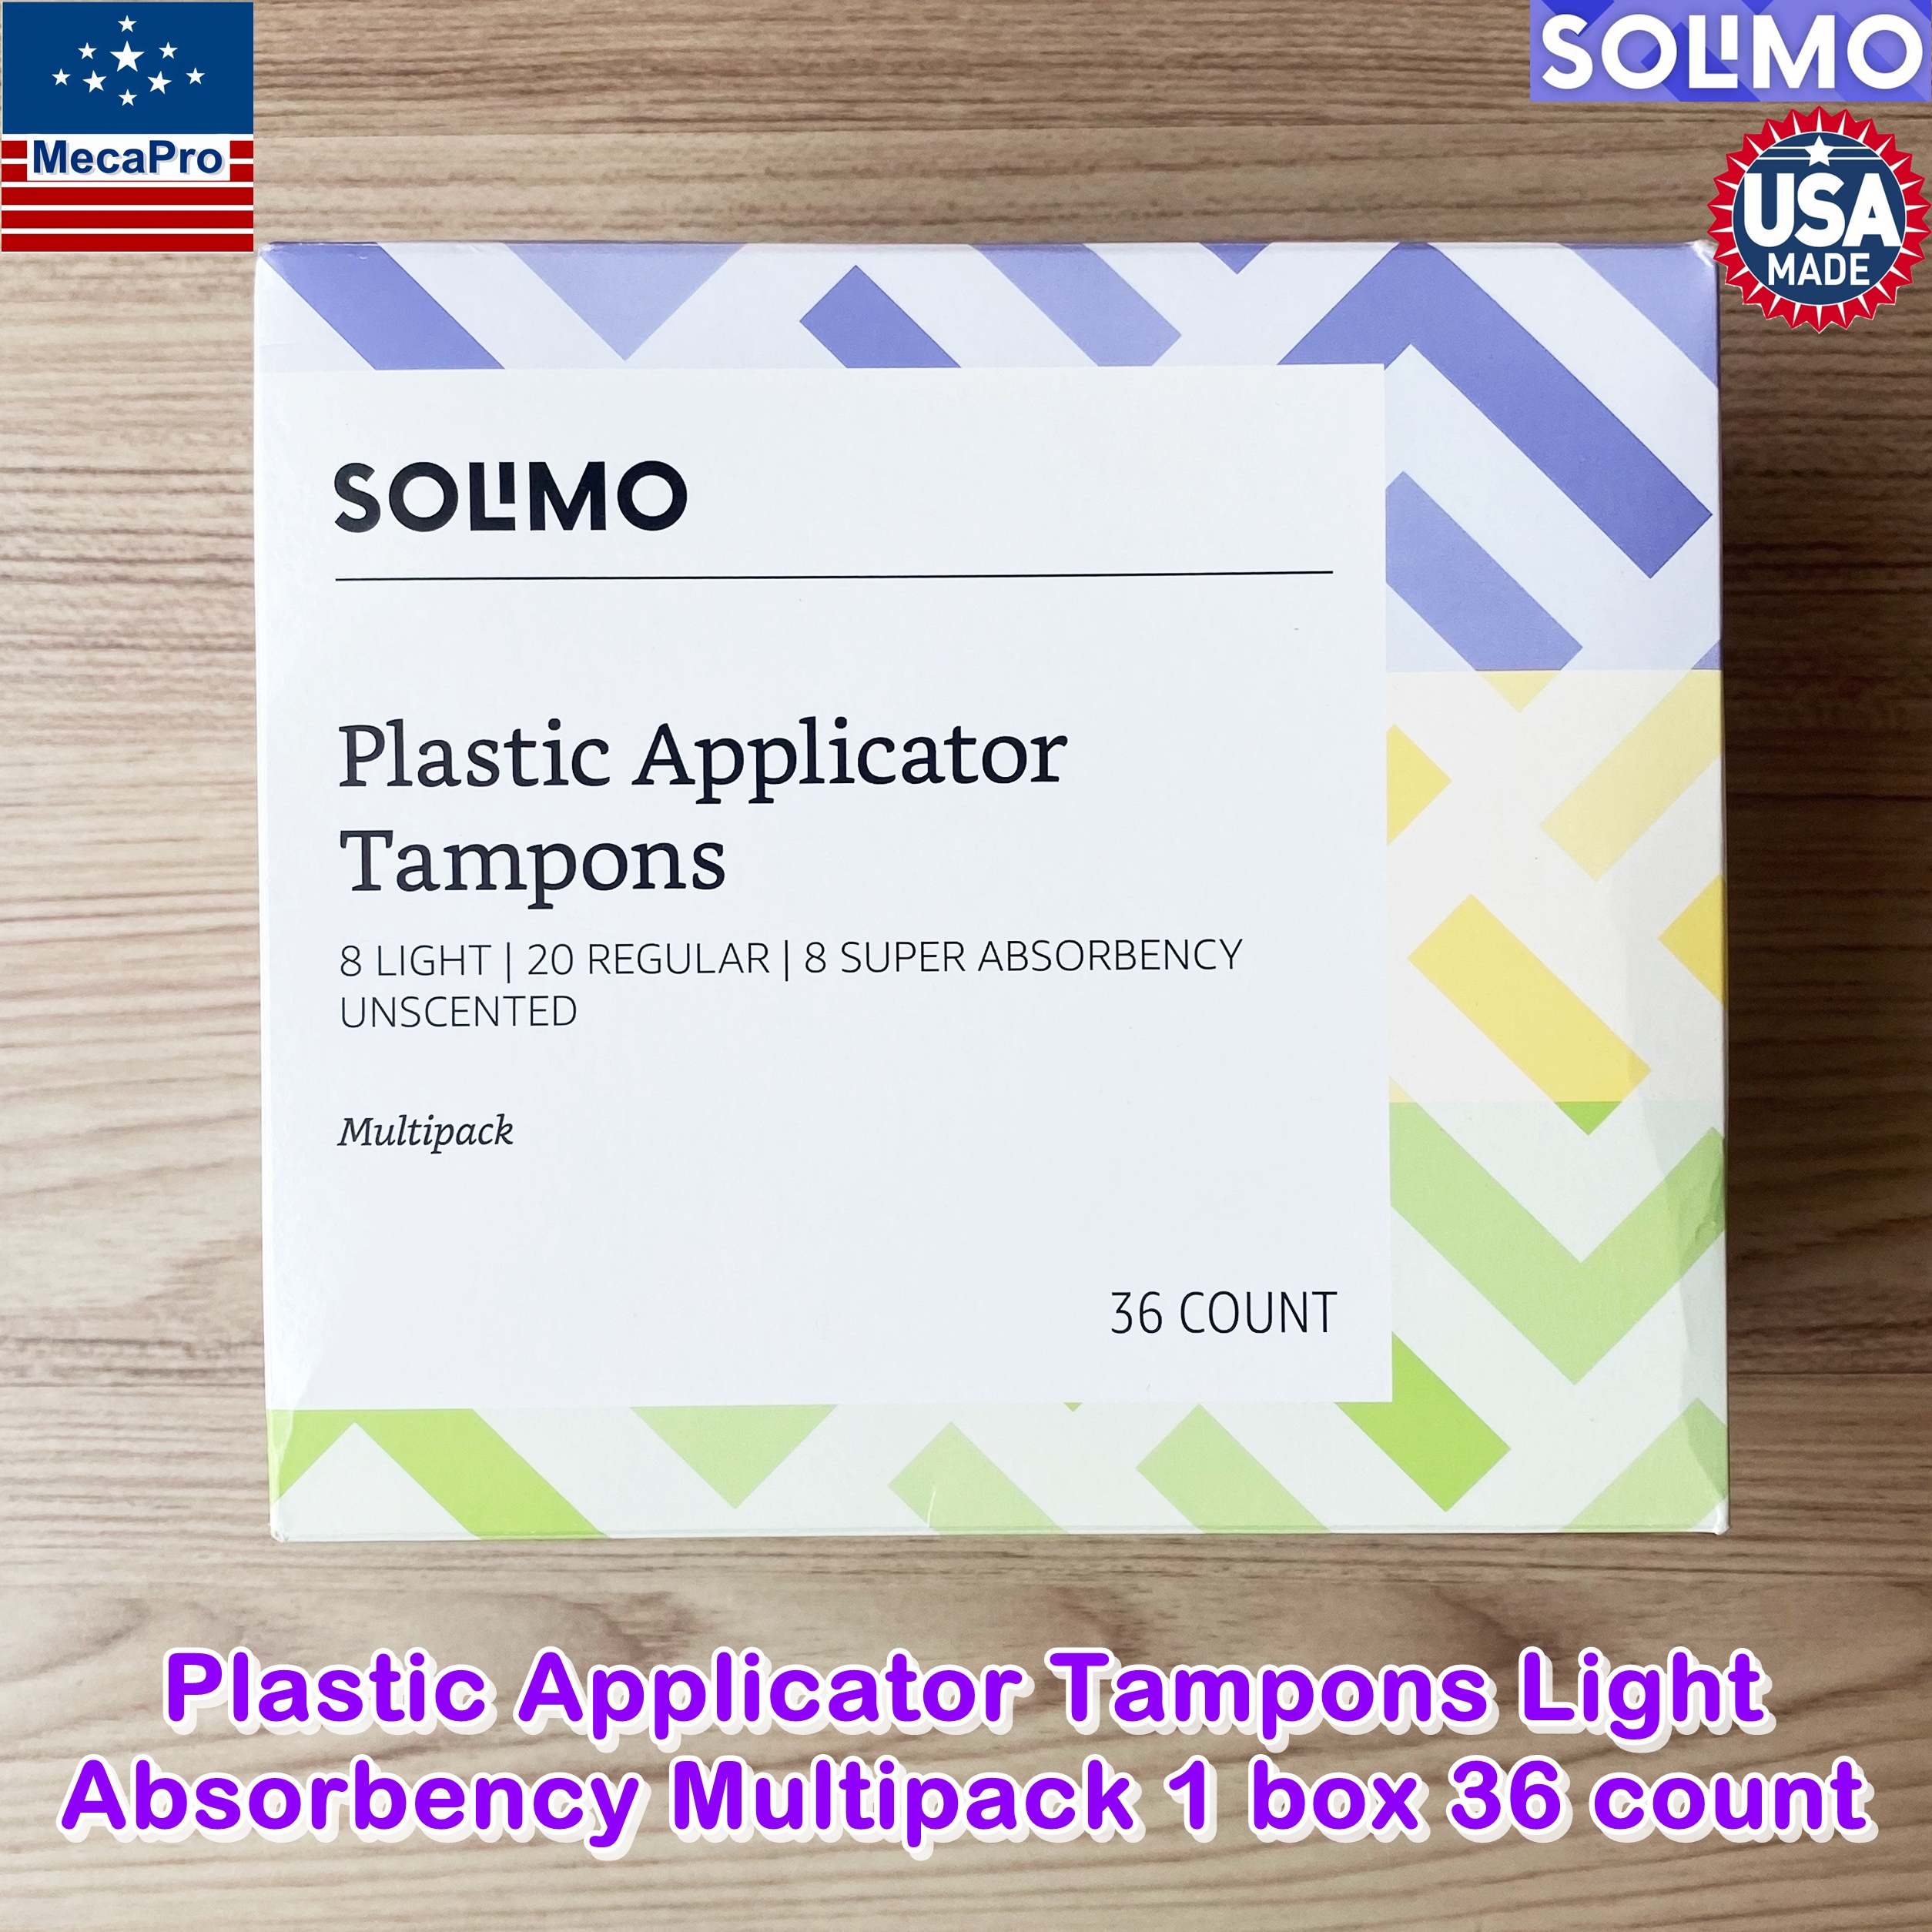 Solimo Plastic Applicator Tampons Light Absorbency Multipack 1 box 36 count ผ้าอนามัยแบบสอด 1 กล่อง คละแบบ 36 ชิ้น